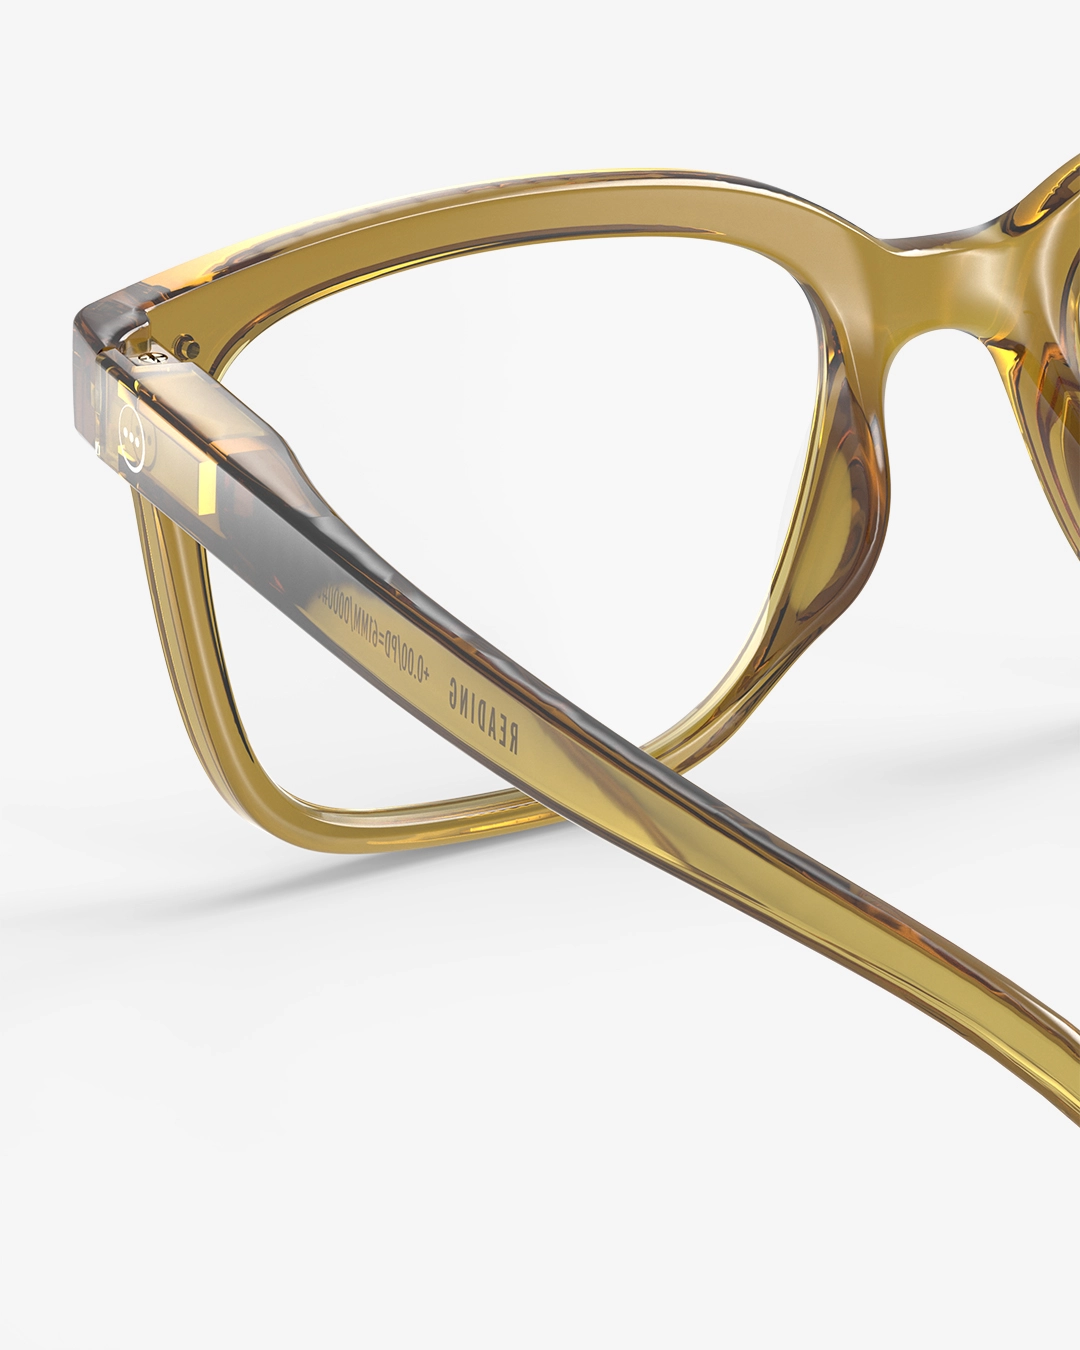 IZIPIZI #L Golden Green Reading Glasses